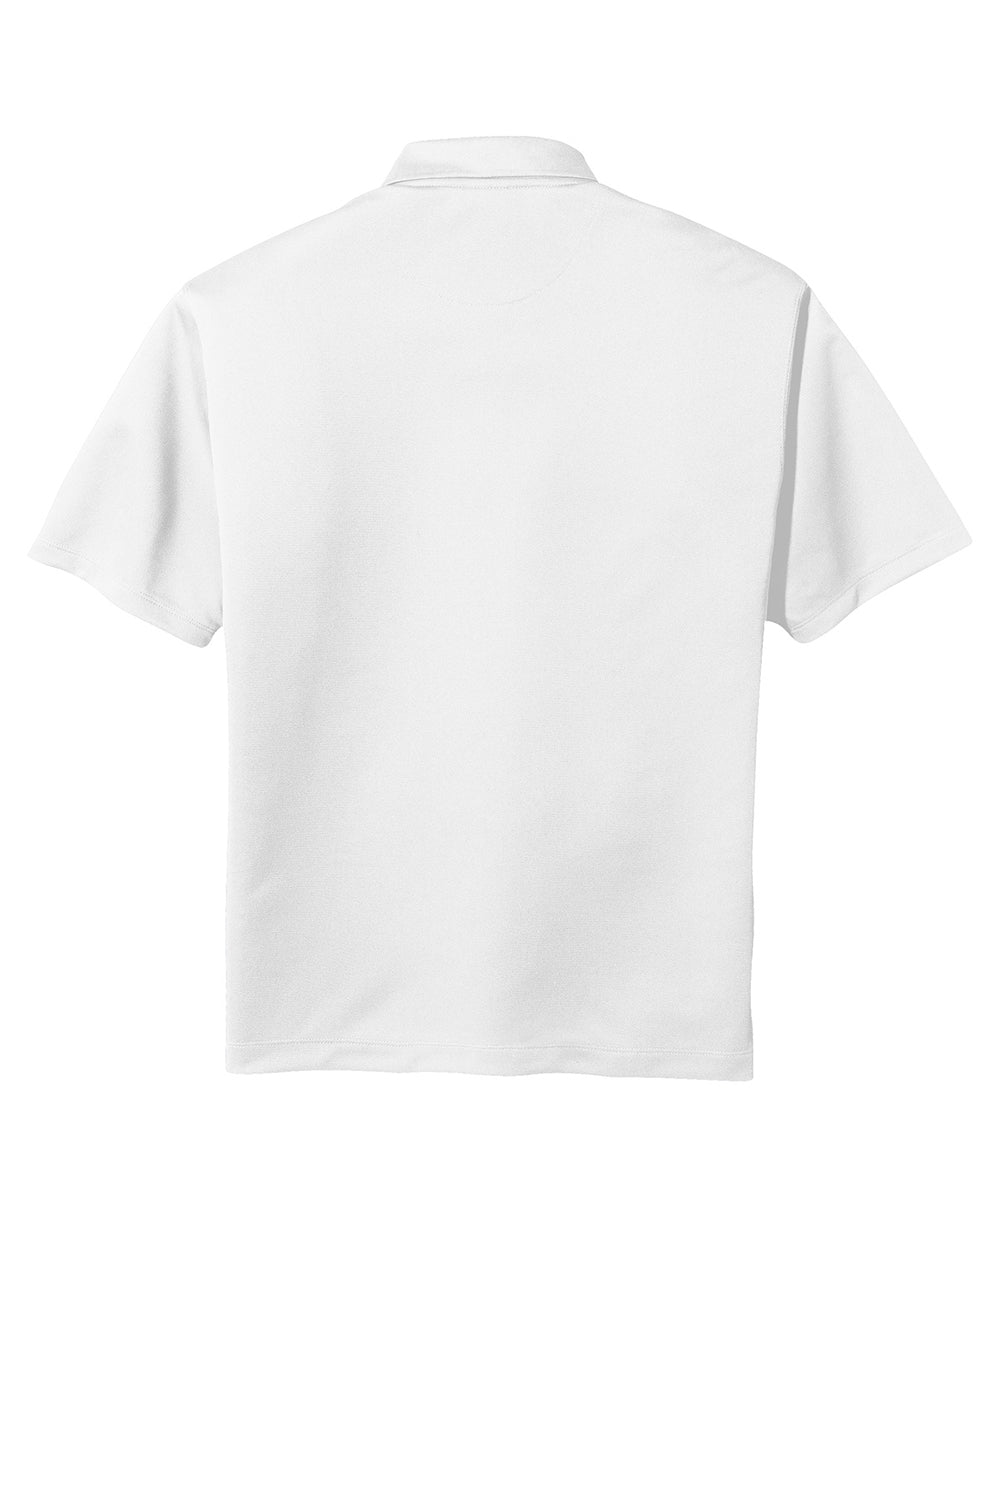 Nike 203690 Mens Tech Basic Dri-Fit Moisture Wicking Short Sleeve Polo Shirt White Flat Back